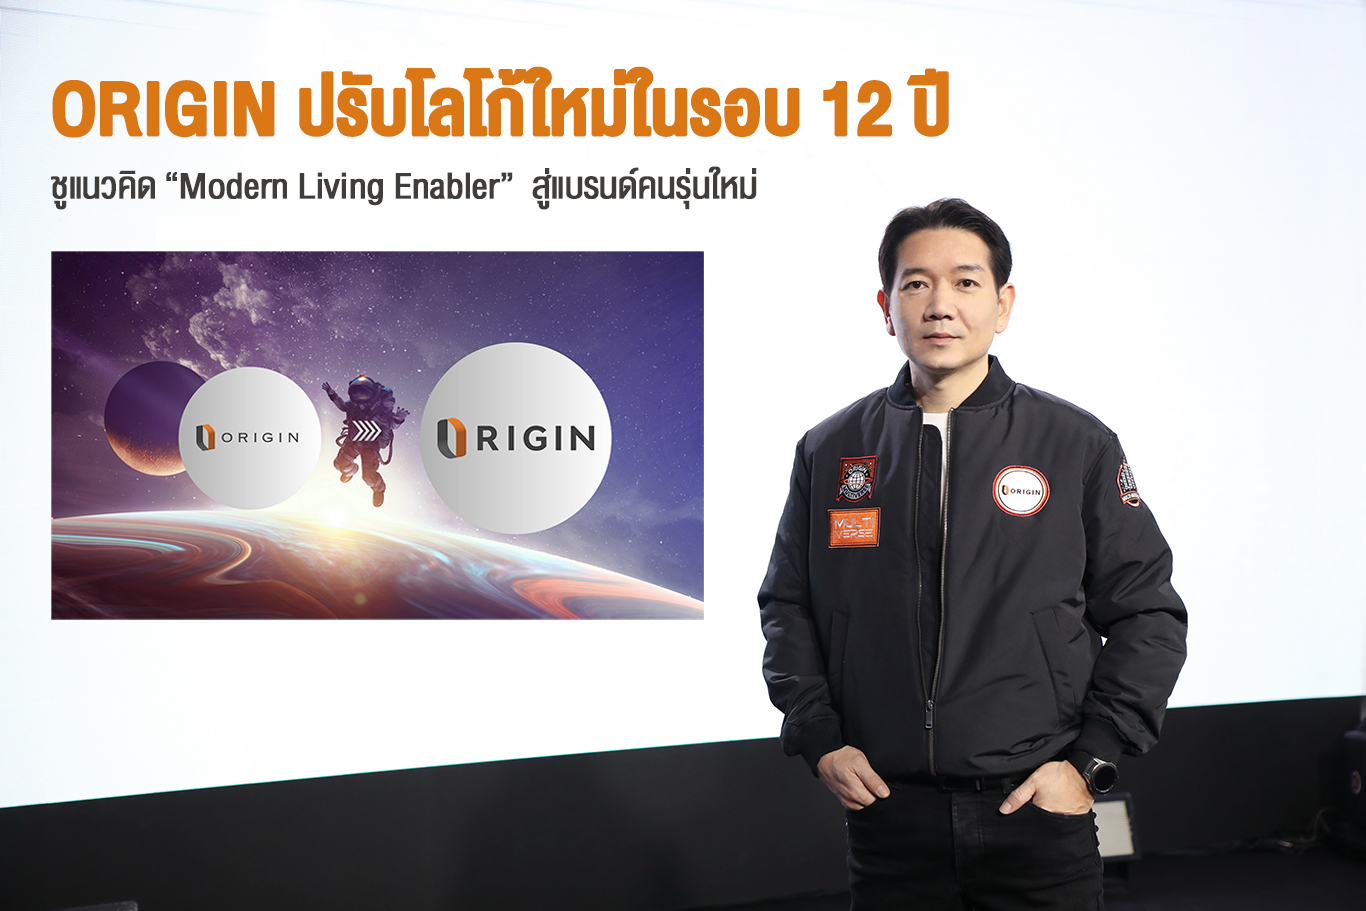 Origin เปลี่ยนโลโก้ใหม่ครั้งแรกรอบ 12 ปี ชูแนวคิด “Modern Living Enabler” สู่แบรนด์คนรุ่นใหม่ ตอบโจทย์การใช้ชีวิตแบบโมเดิร์น 